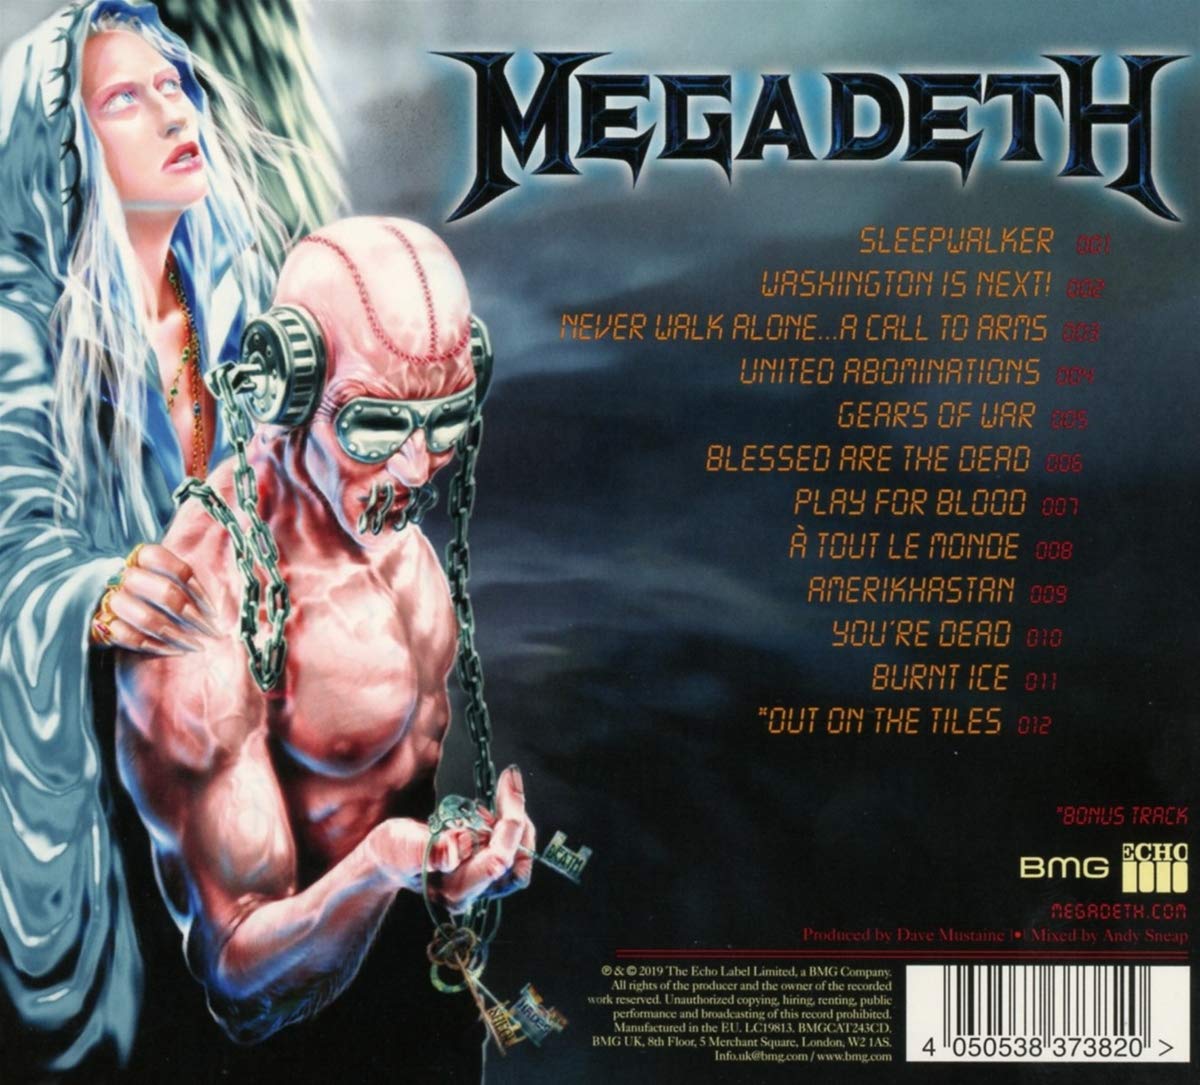 Megadeth -United Abominations